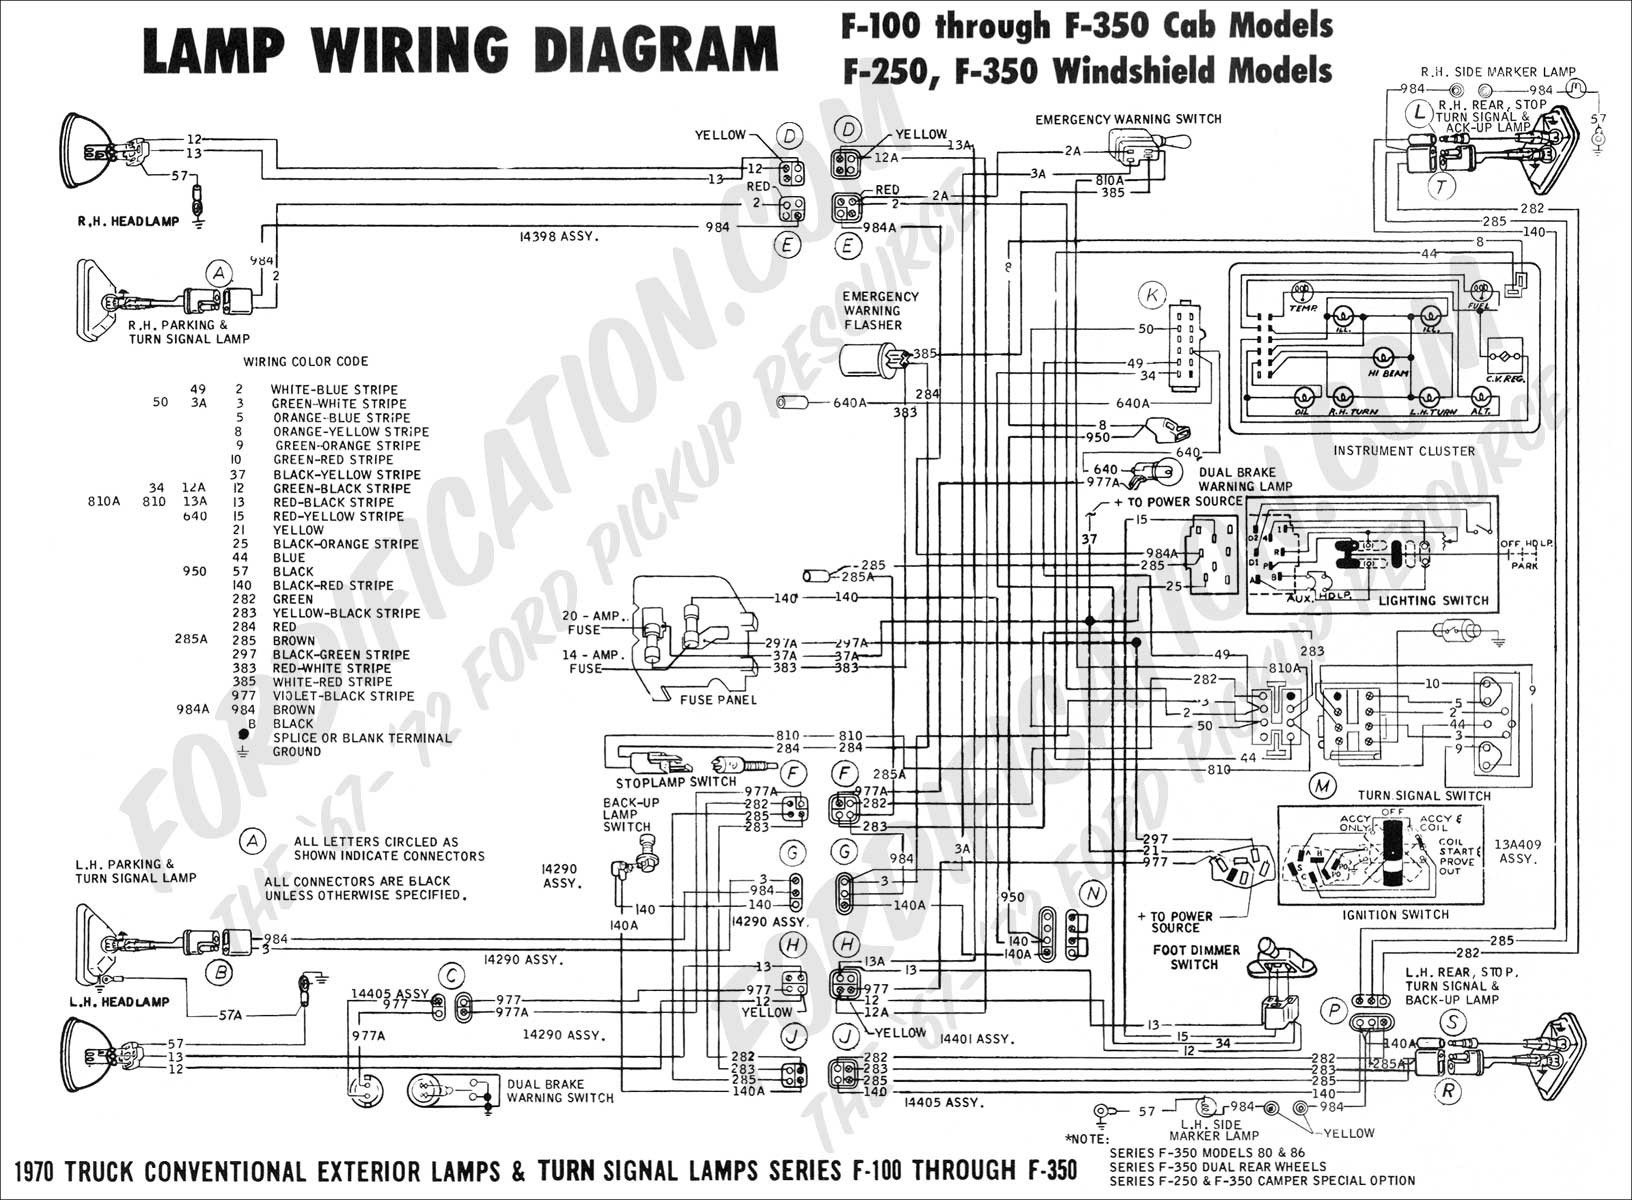 1990 Lincoln town Car Wiring Diagram 1990 ford F 150 Wiring Diagram Wiring Diagram Of 1990 Lincoln town Car Wiring Diagram